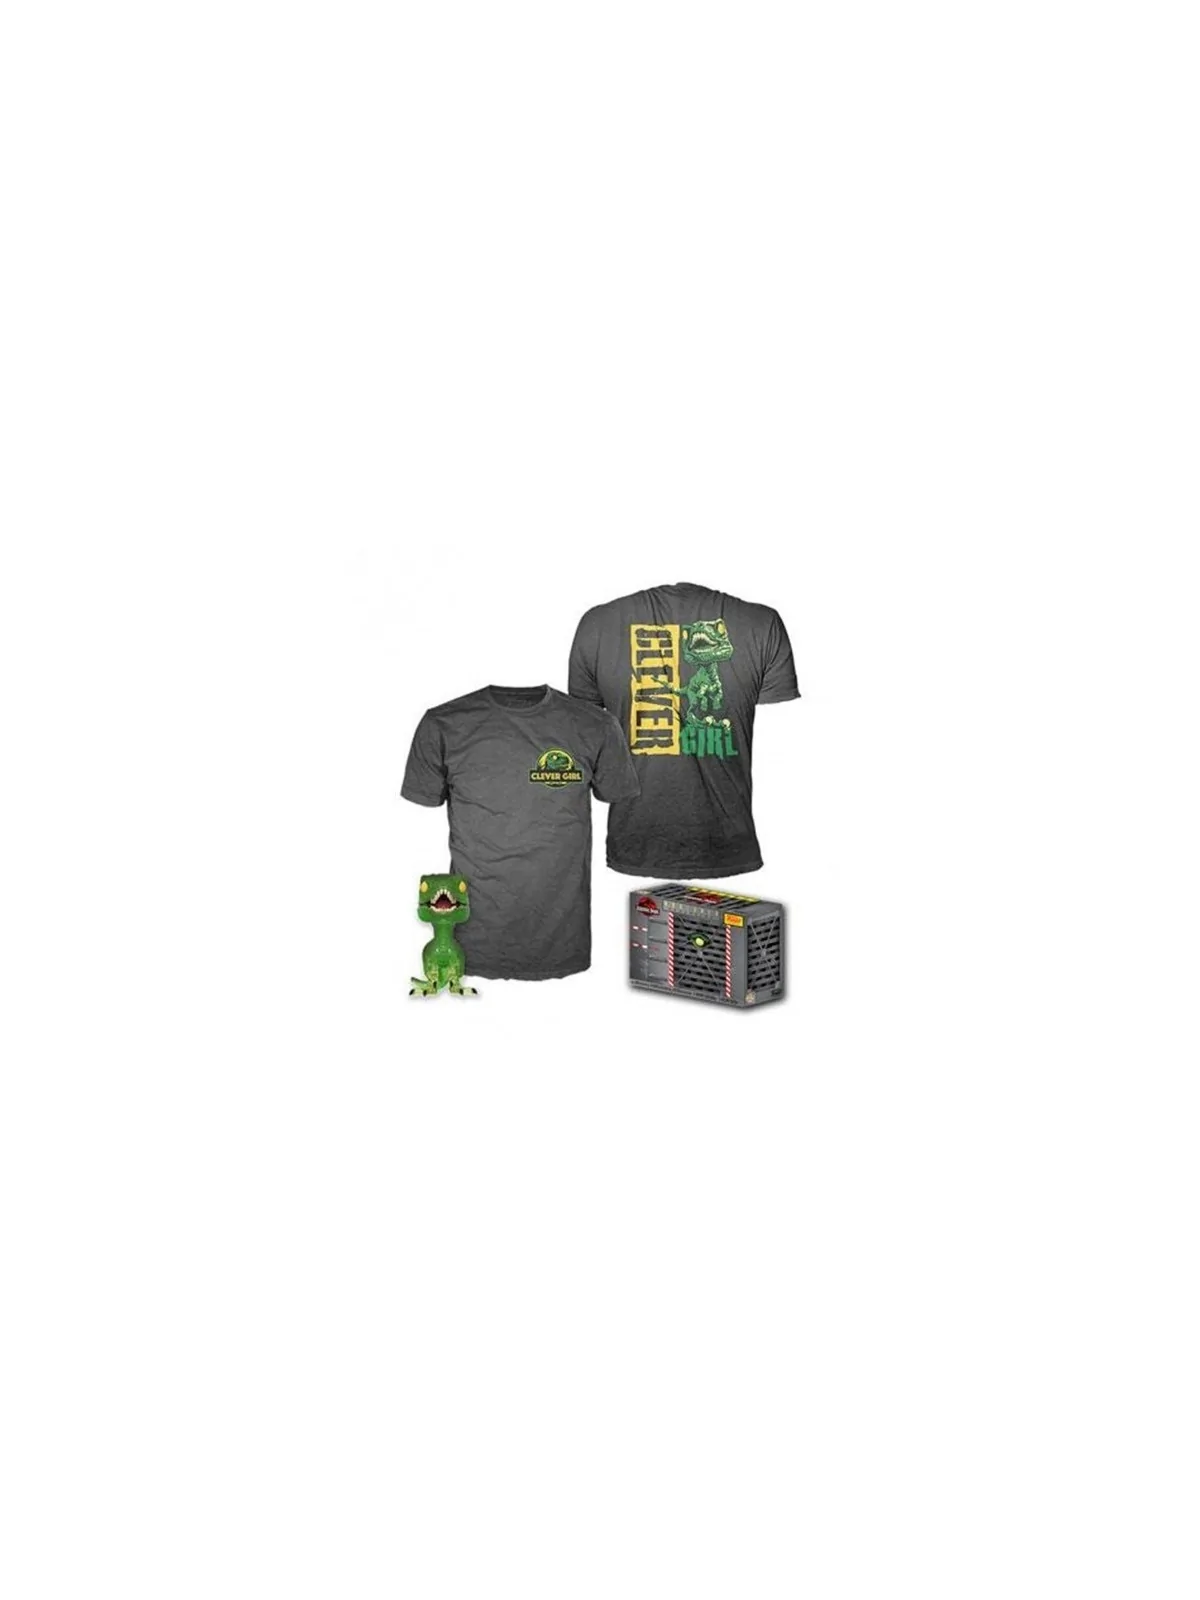 Comprar Pop&Tee Jurassic Park Clever Raptor Funko+Camiseta barato al m